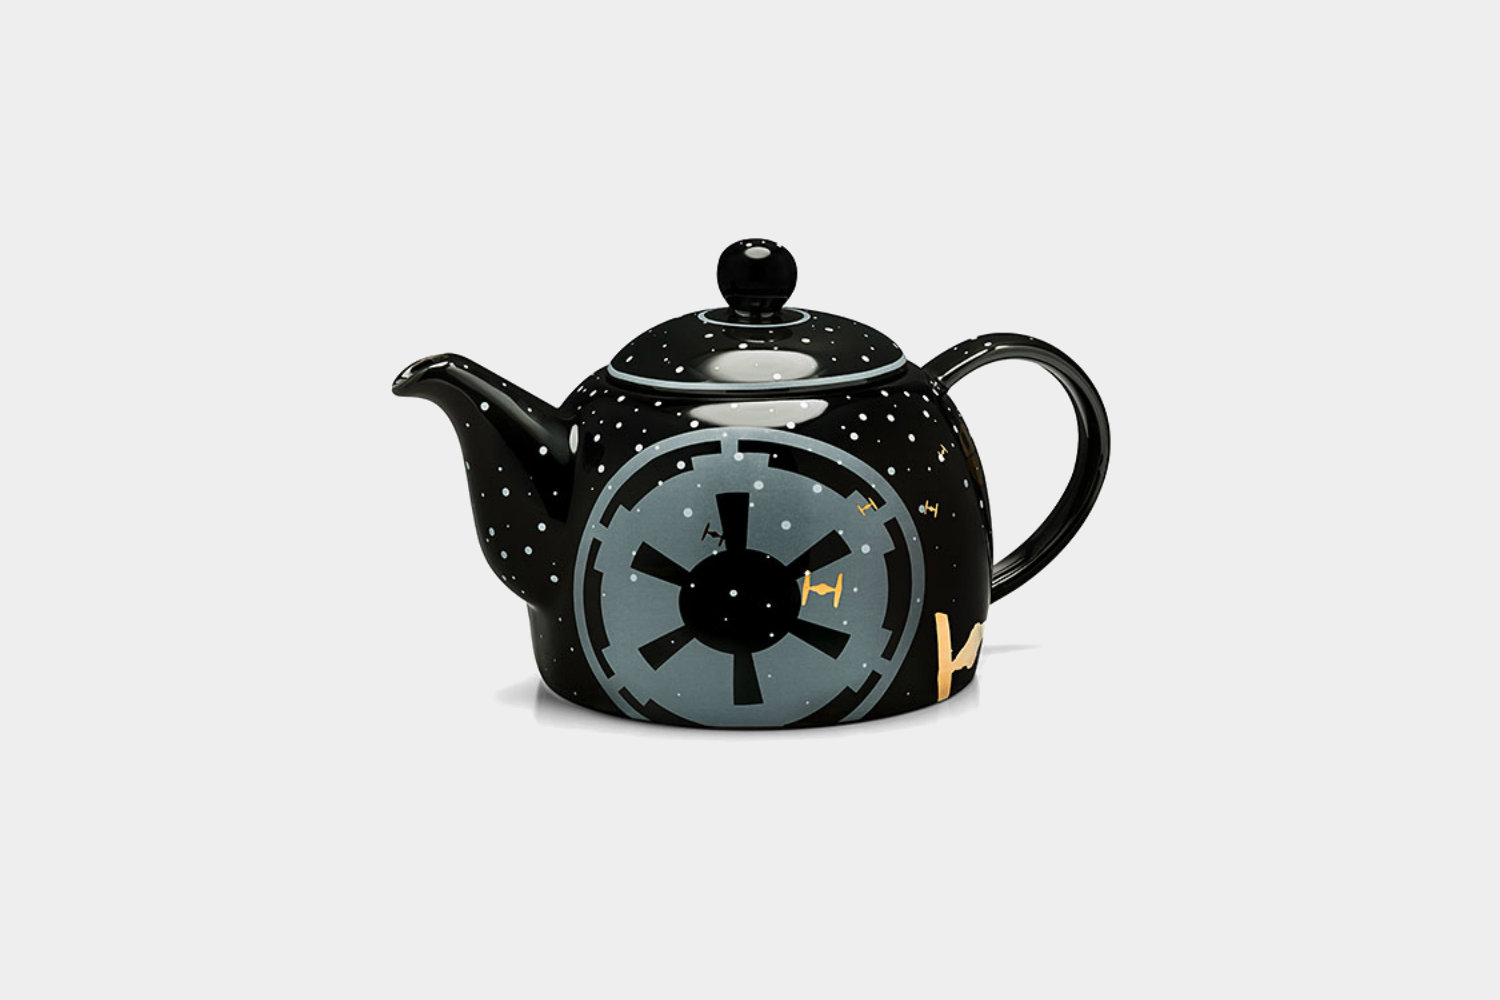 https://www.digitaltrends.com/wp-content/uploads/2018/05/best-star-wars-merch-teapot.jpg?fit=1500%2C1000&p=1